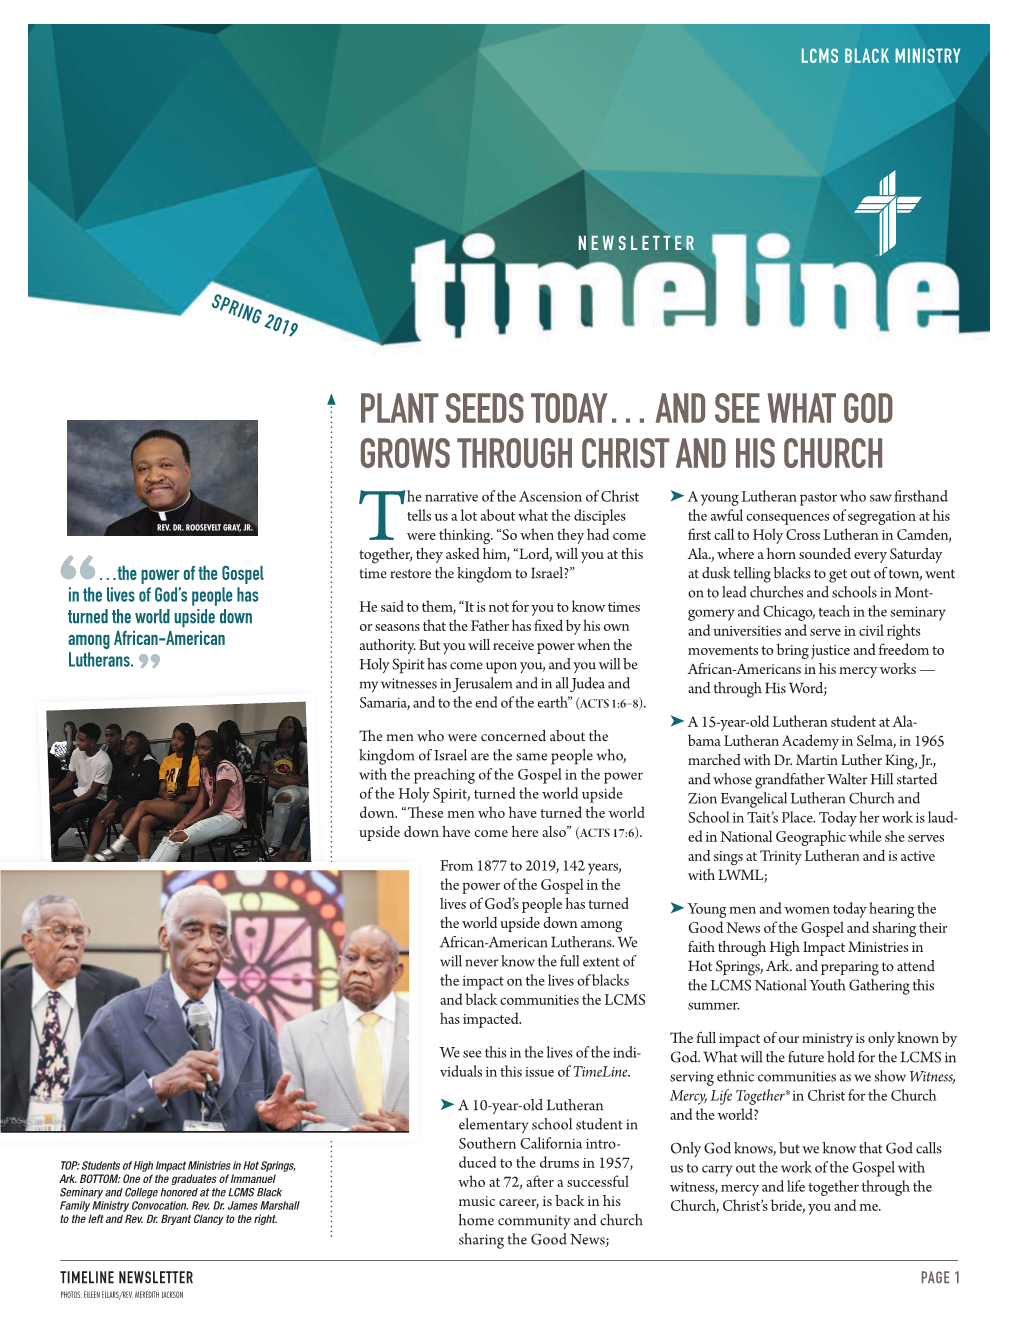 LCMS Black Ministry Spring 2019 Timeline Newsletter